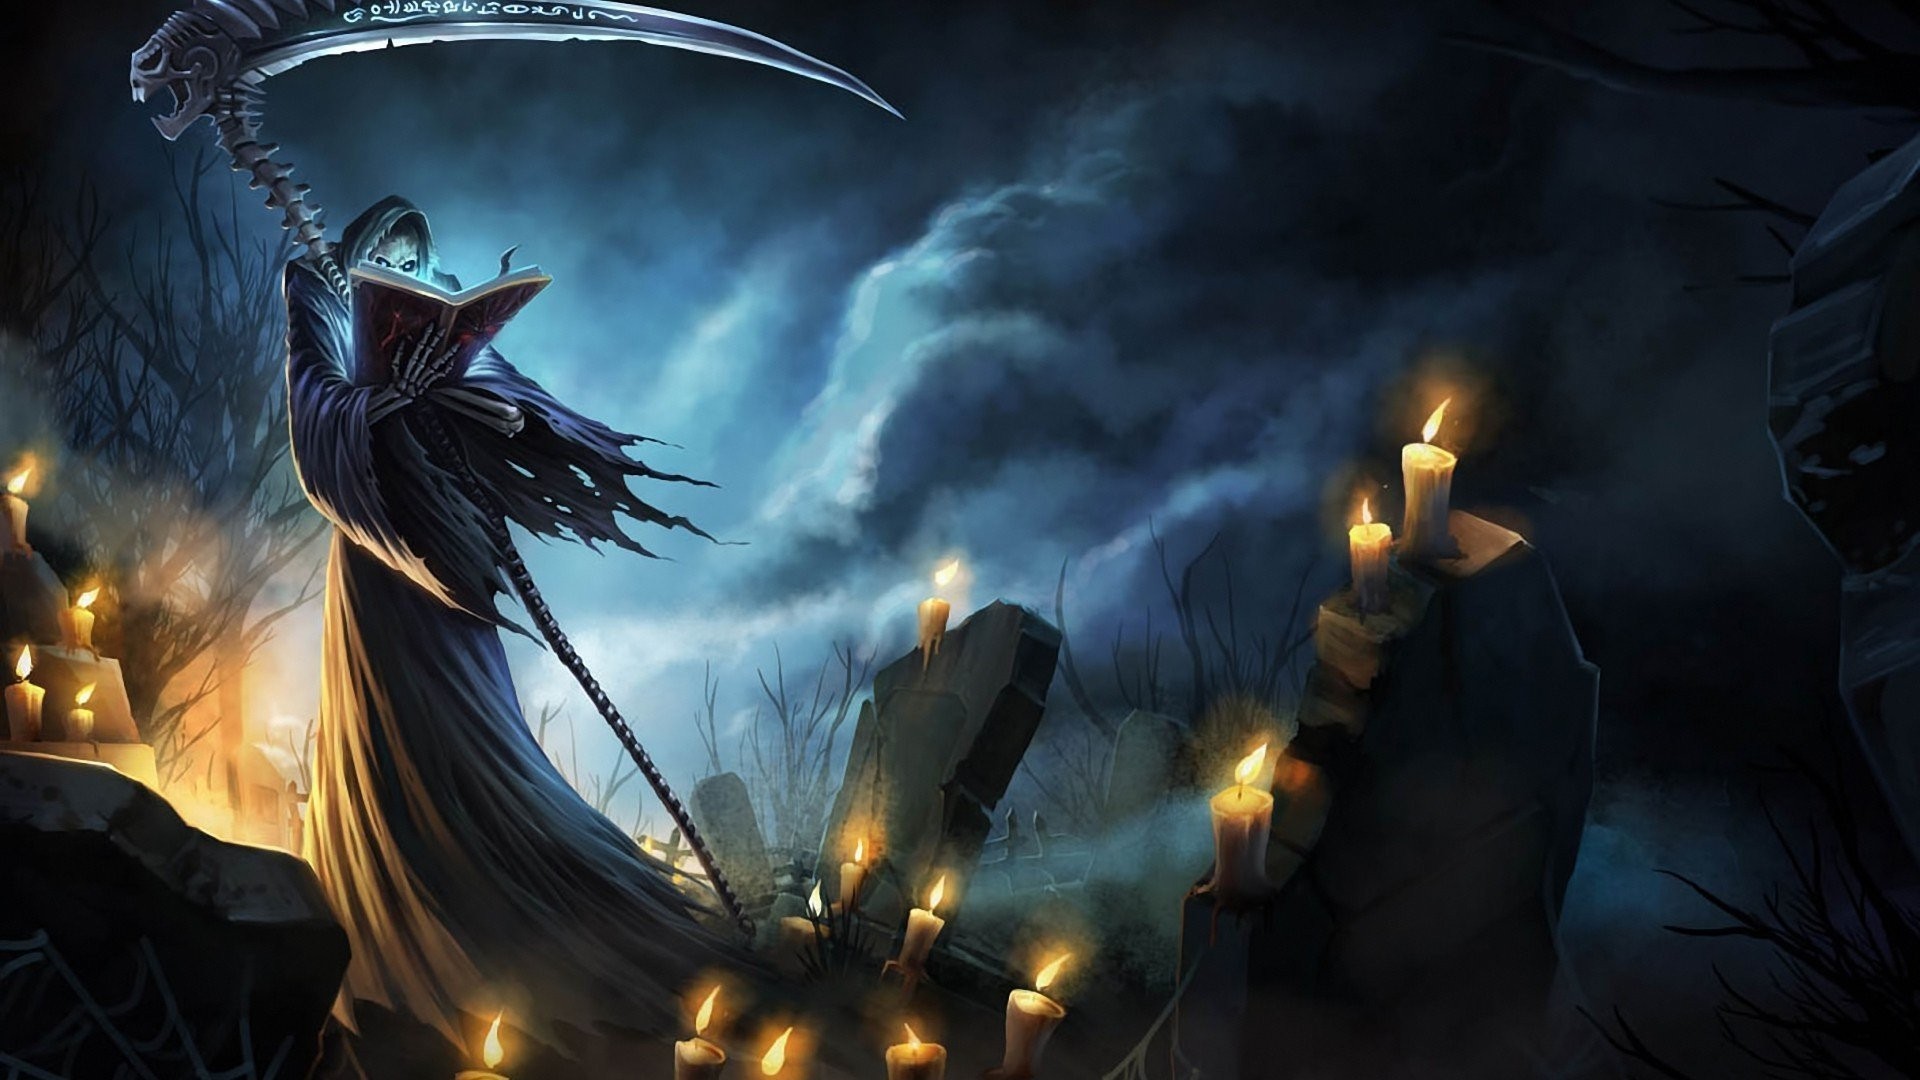 grim reaper live wallpapers,cg artwork,demon,darkness,screenshot,fictional character